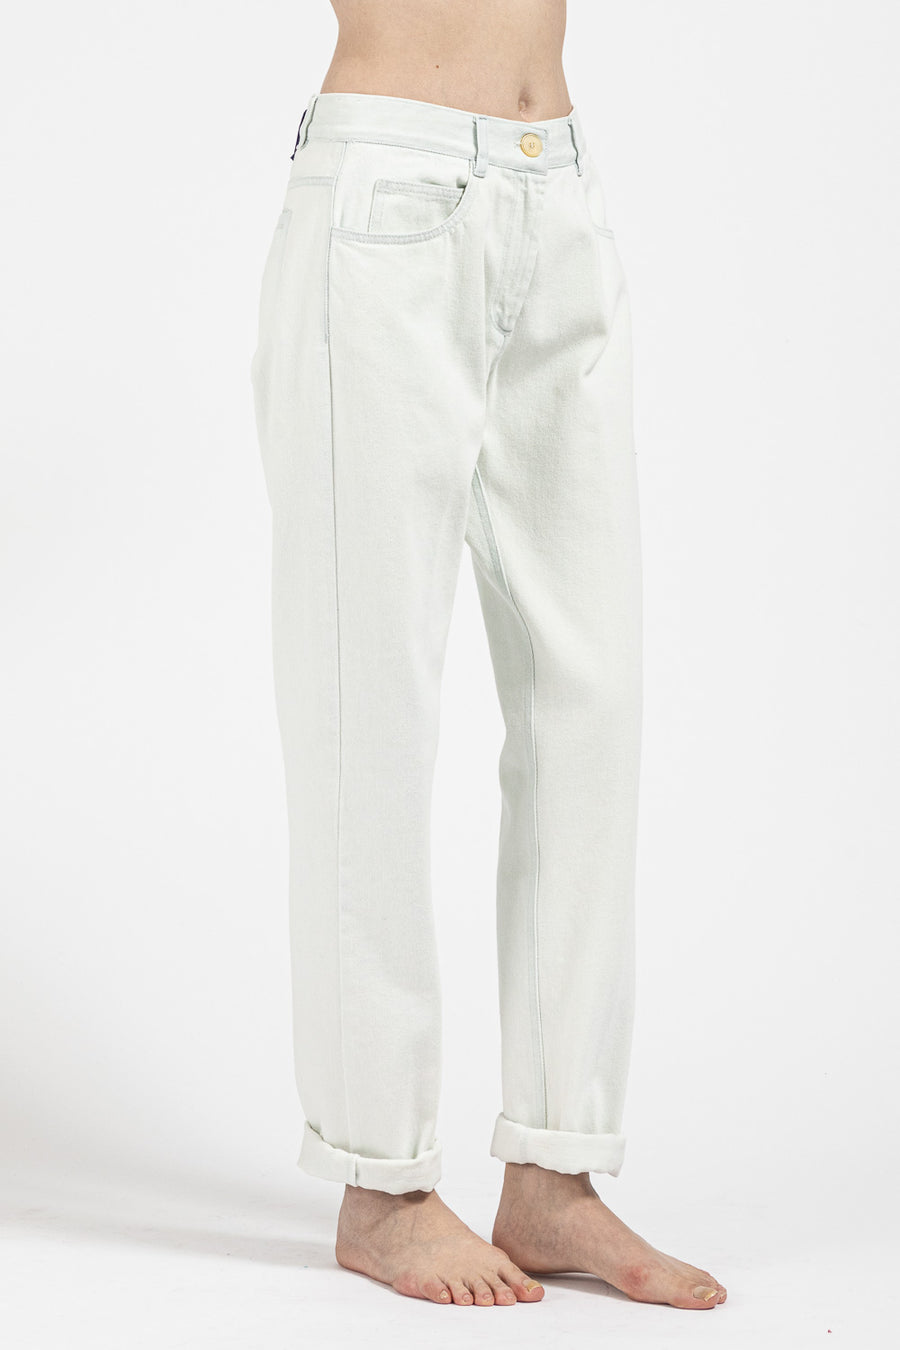 Pantalone Forte Forte in denim color bleach